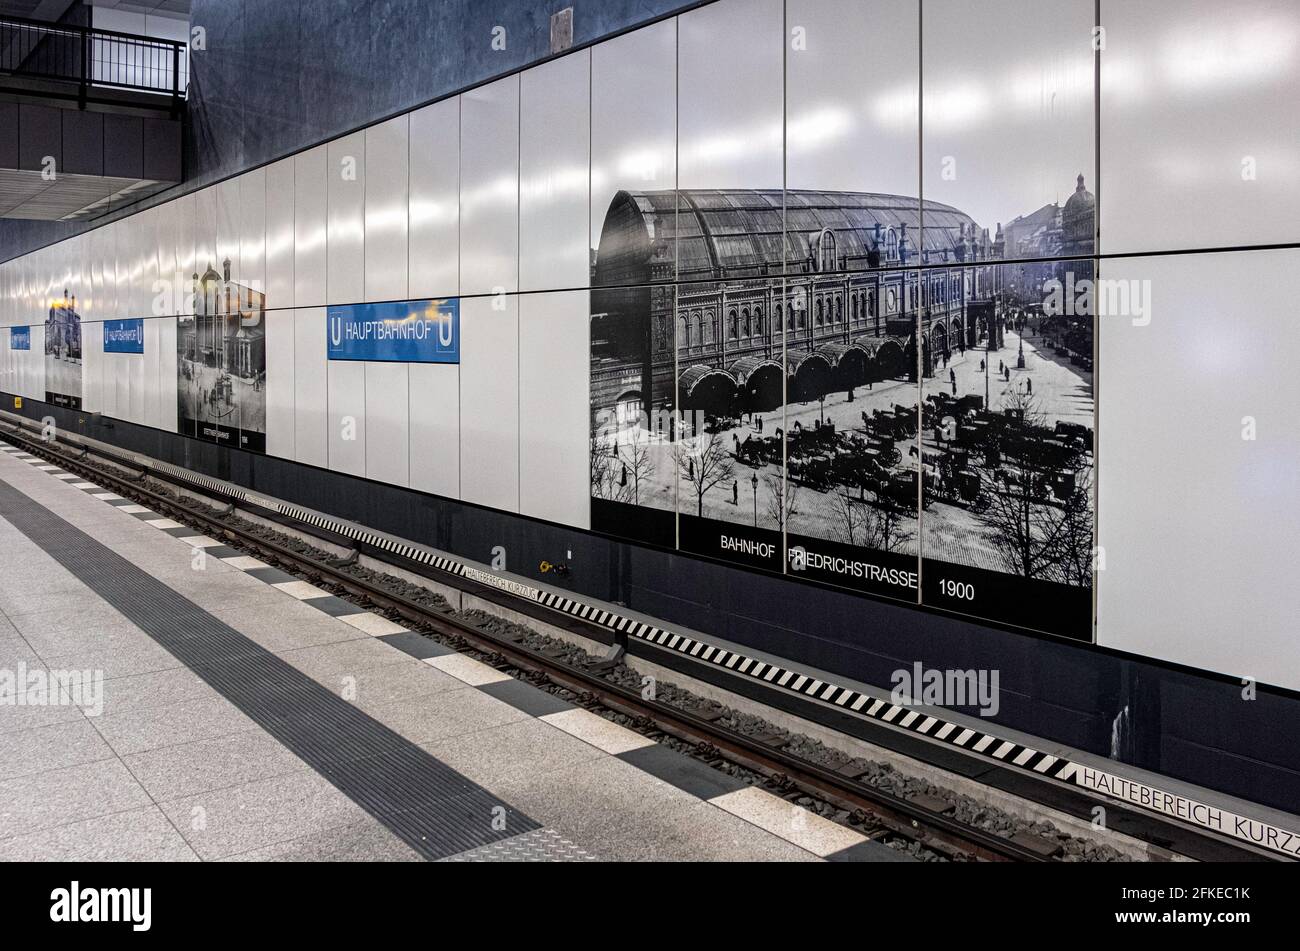 Berlin Hauptbahnhof railway station. Platform of U55 U-bahn railway line to the Brandenbutg Gate. Newest U-bahn line with white tiled walls & old hist Stock Photo